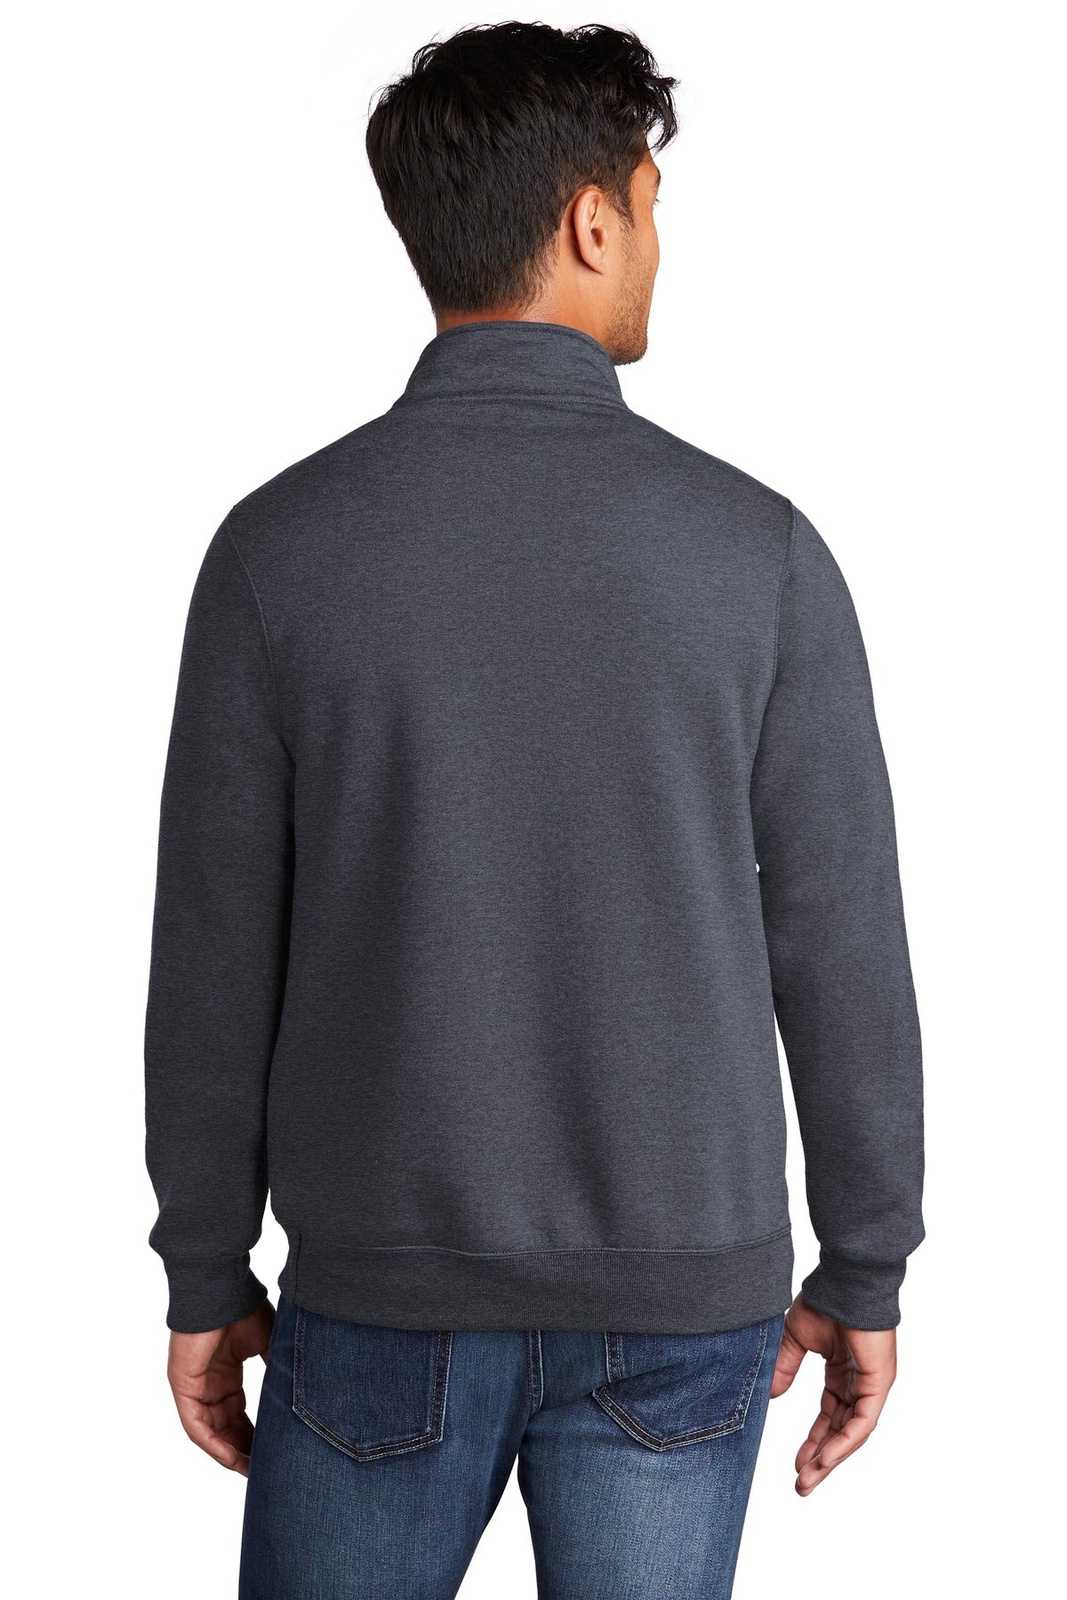 Port &amp; Company PC78Q Core Fleece 1/4-Zip Pullover Sweatshirt - Heather Navy - HIT a Double - 2